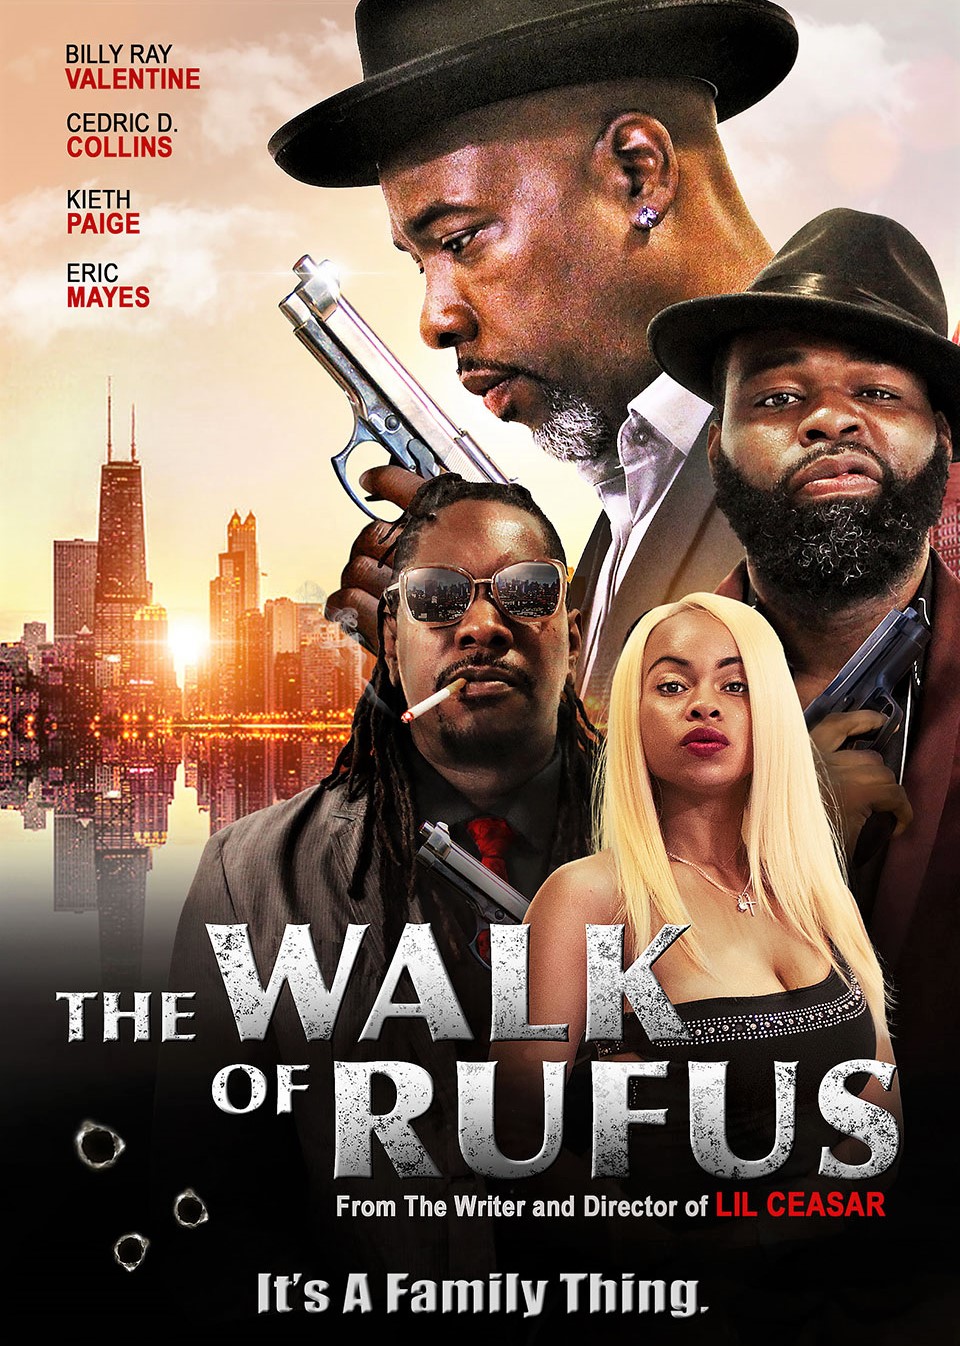 The Walk of Rufus (2022)